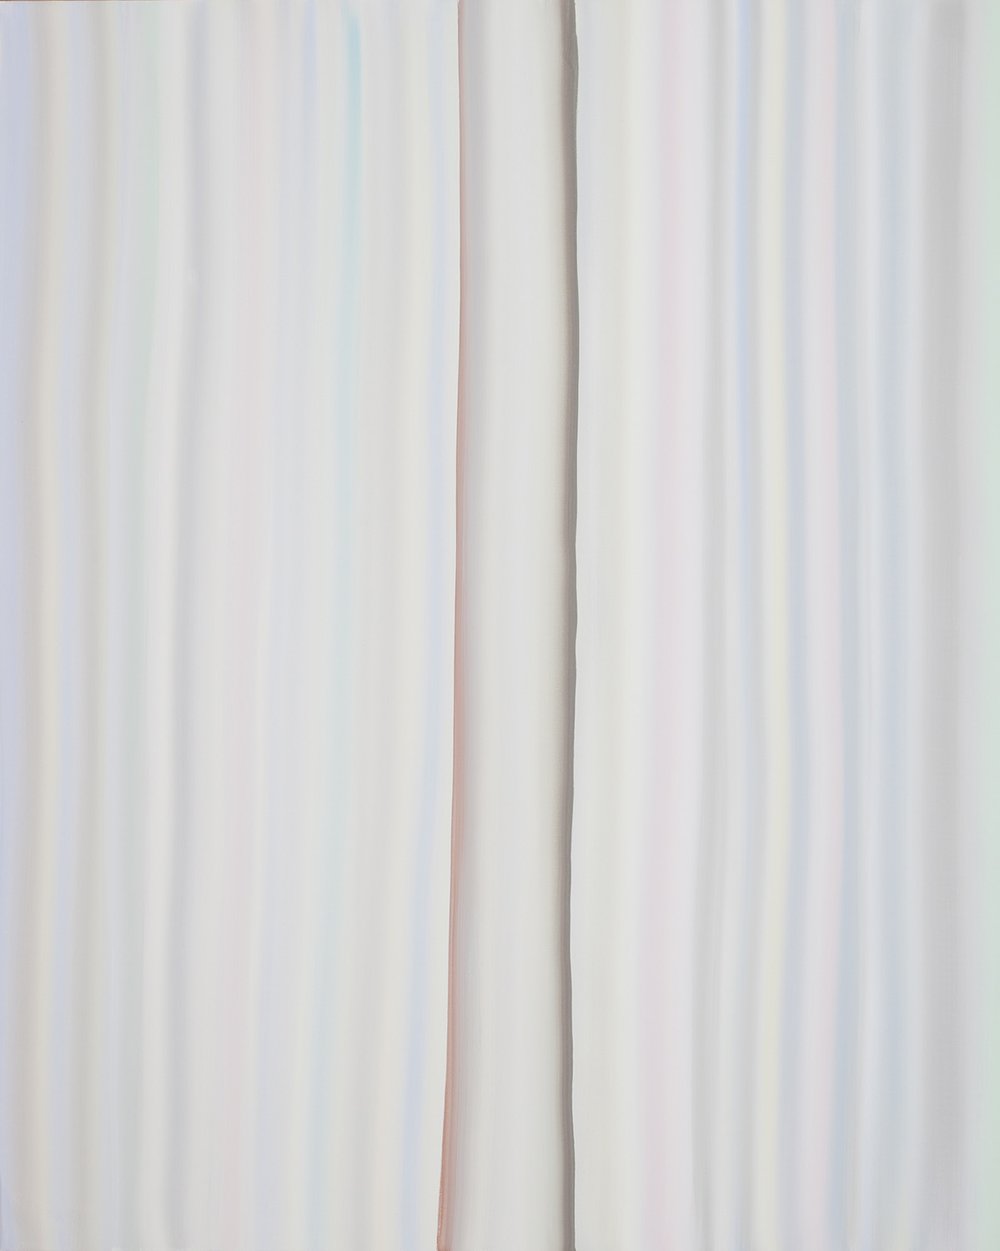 Ghost Tree - Pale Stripes, Wanda Koop